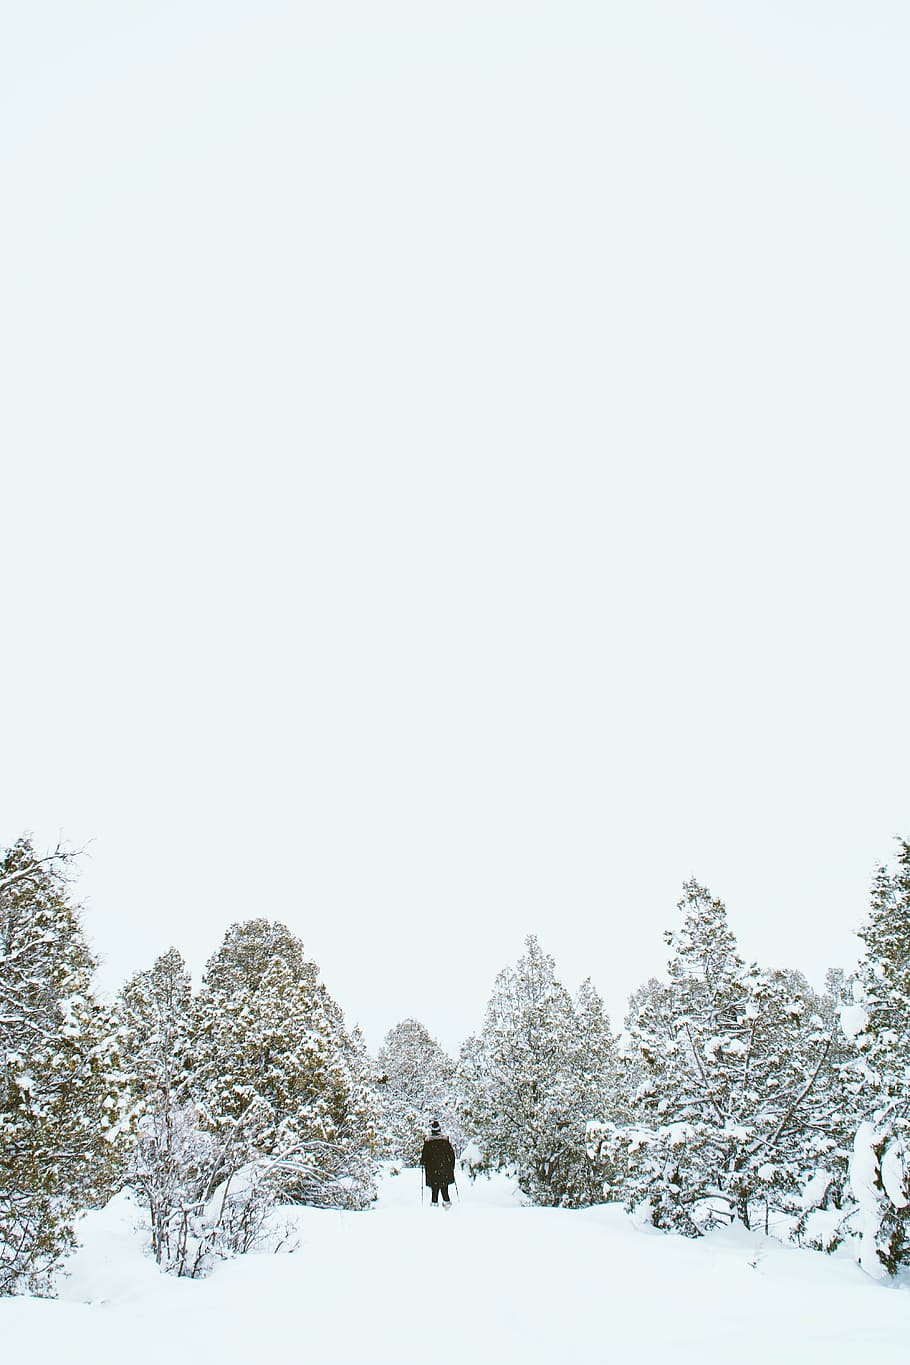 man, holding, ski pole, snow field, snow, winter, white, cold, weather, ice